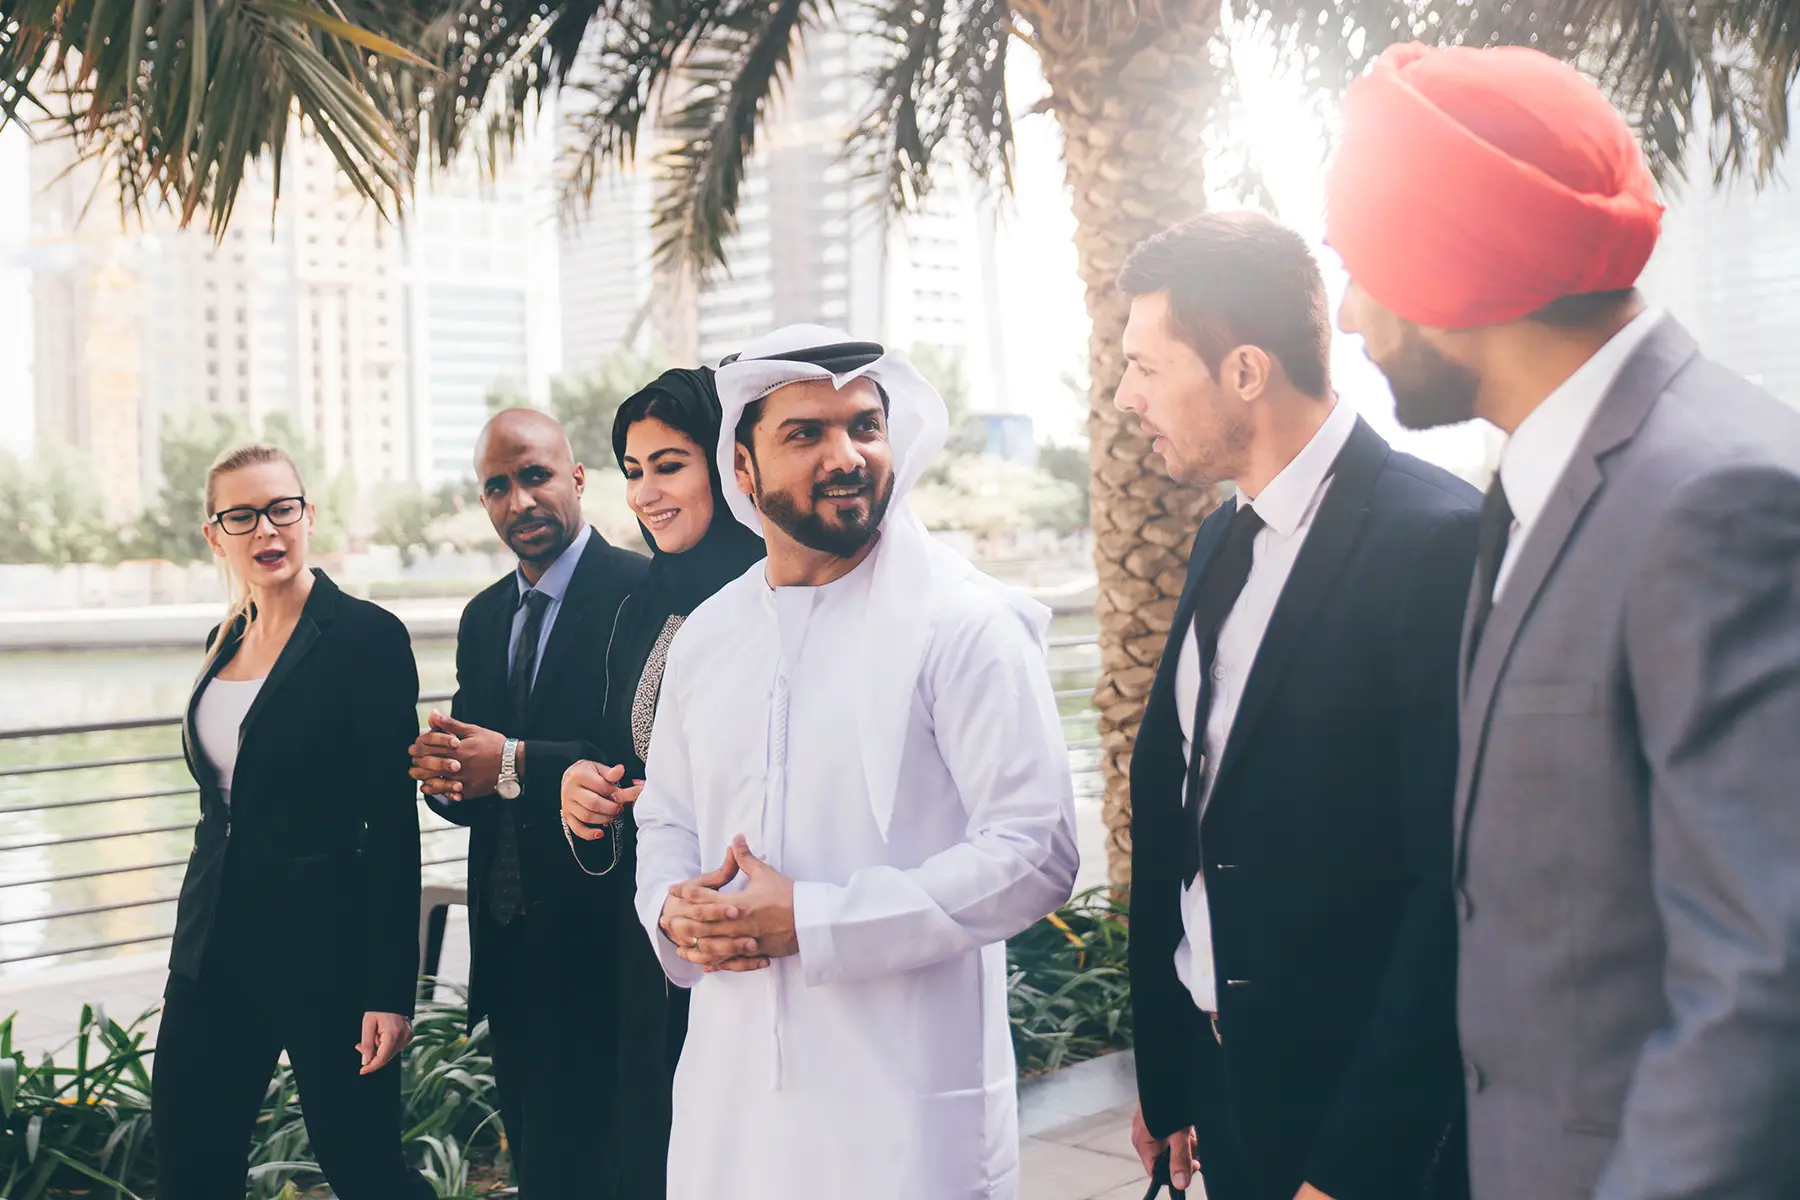 Business associates walking together in Qatar